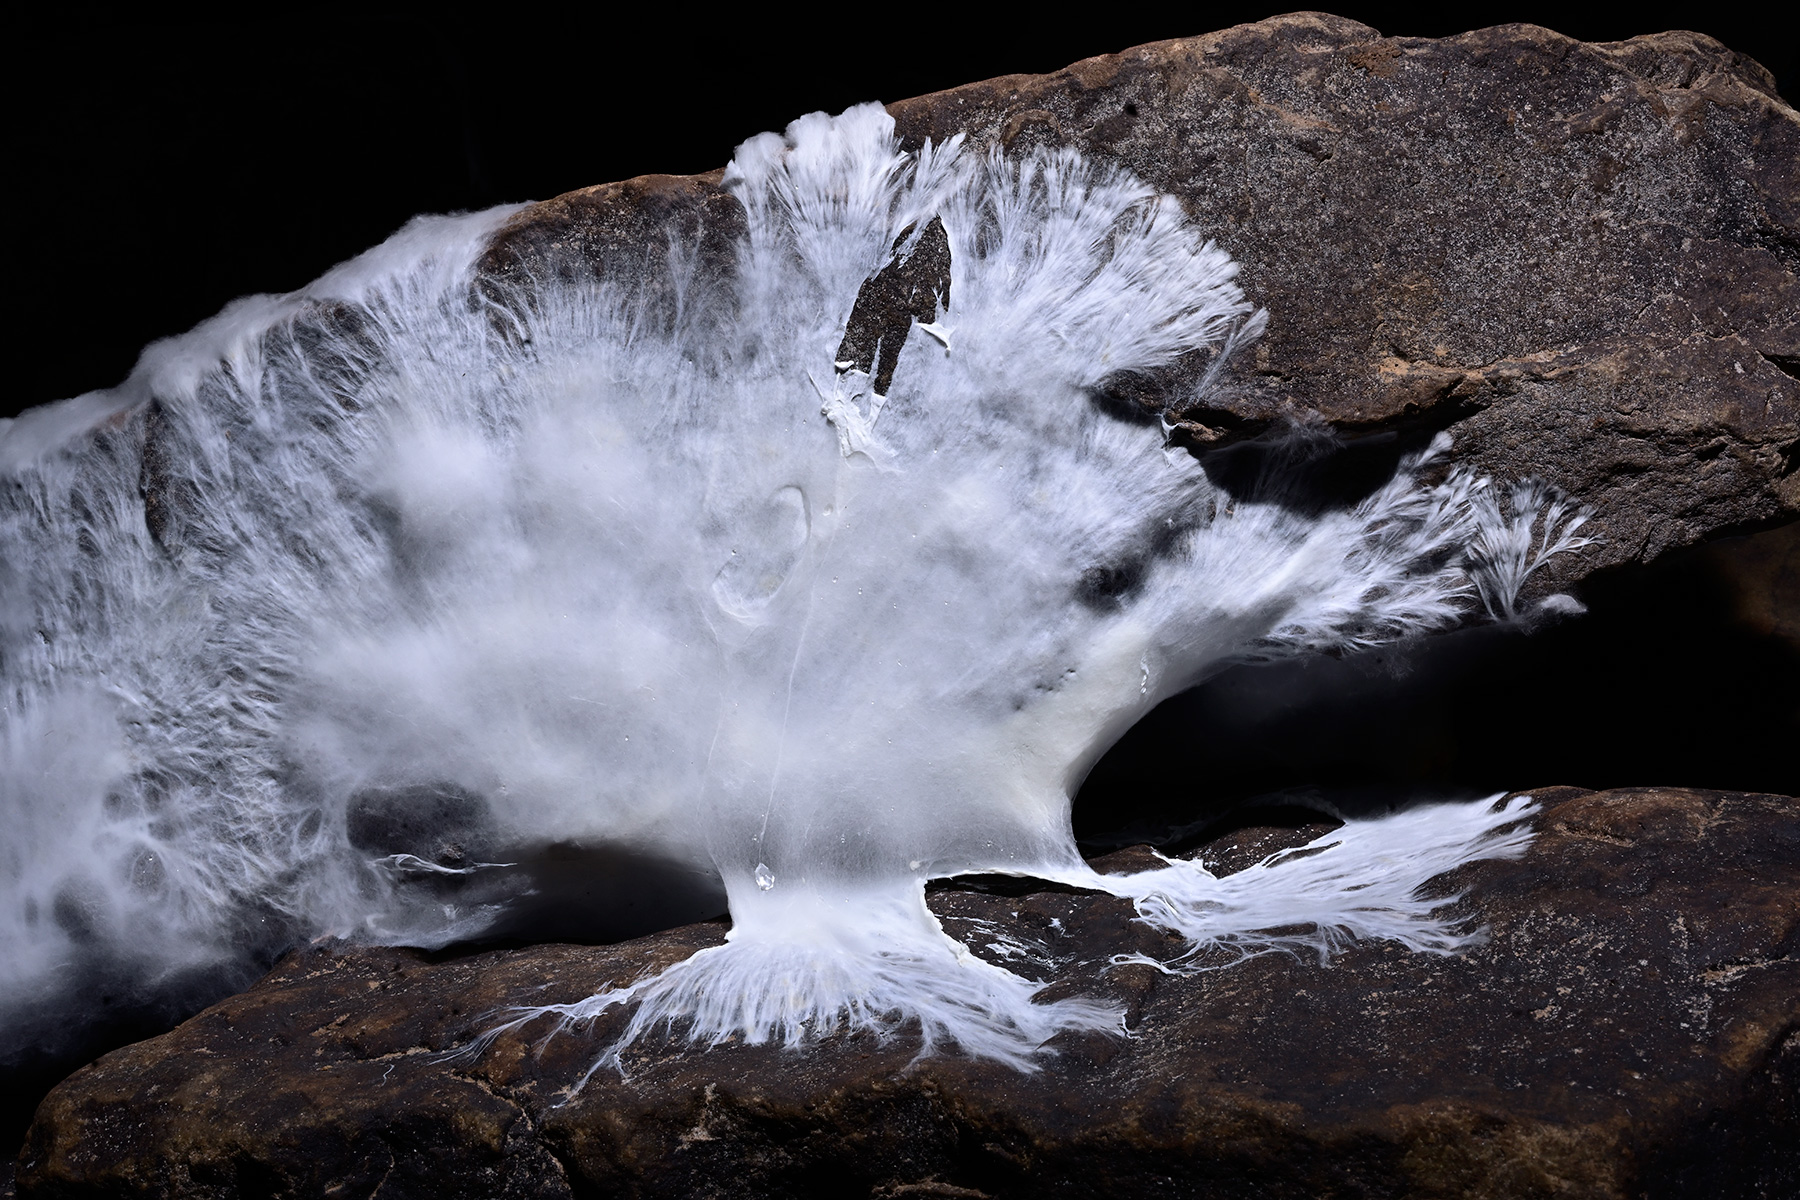 Snedegars Cave (Virginie occidentale, USA) - Moisissures blanches sur un rocher